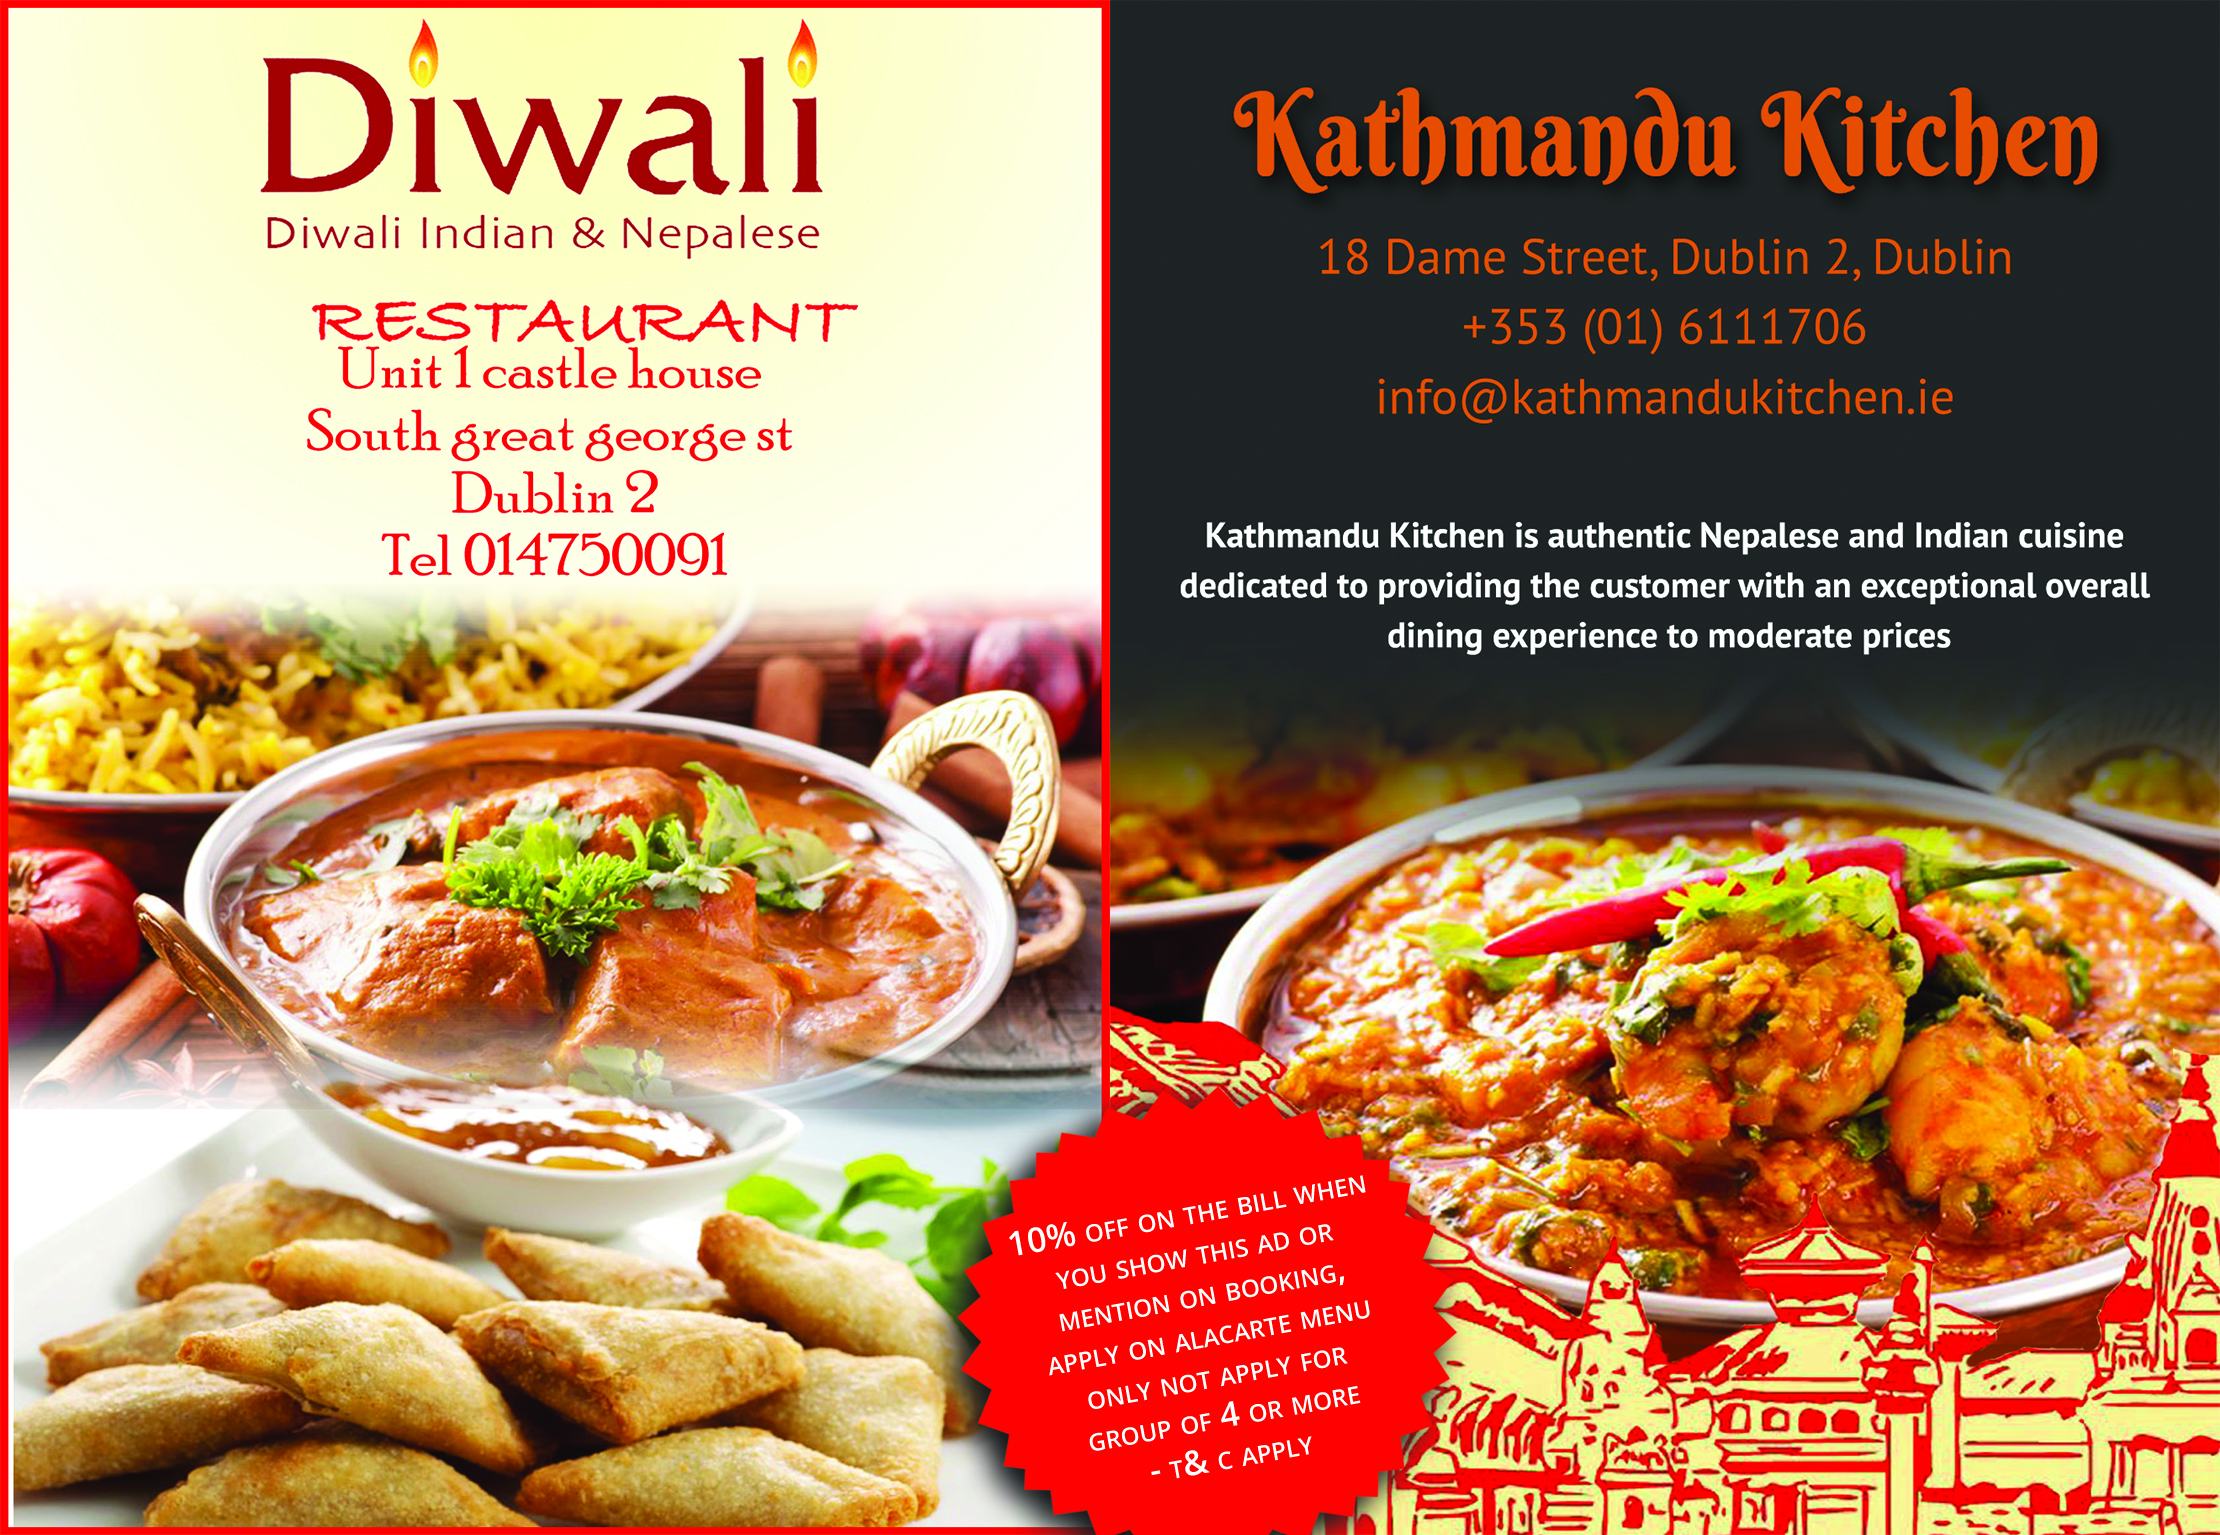 Kathmandu Kitchen & Diwali Indian & Nepalese Restaurant – The Garda